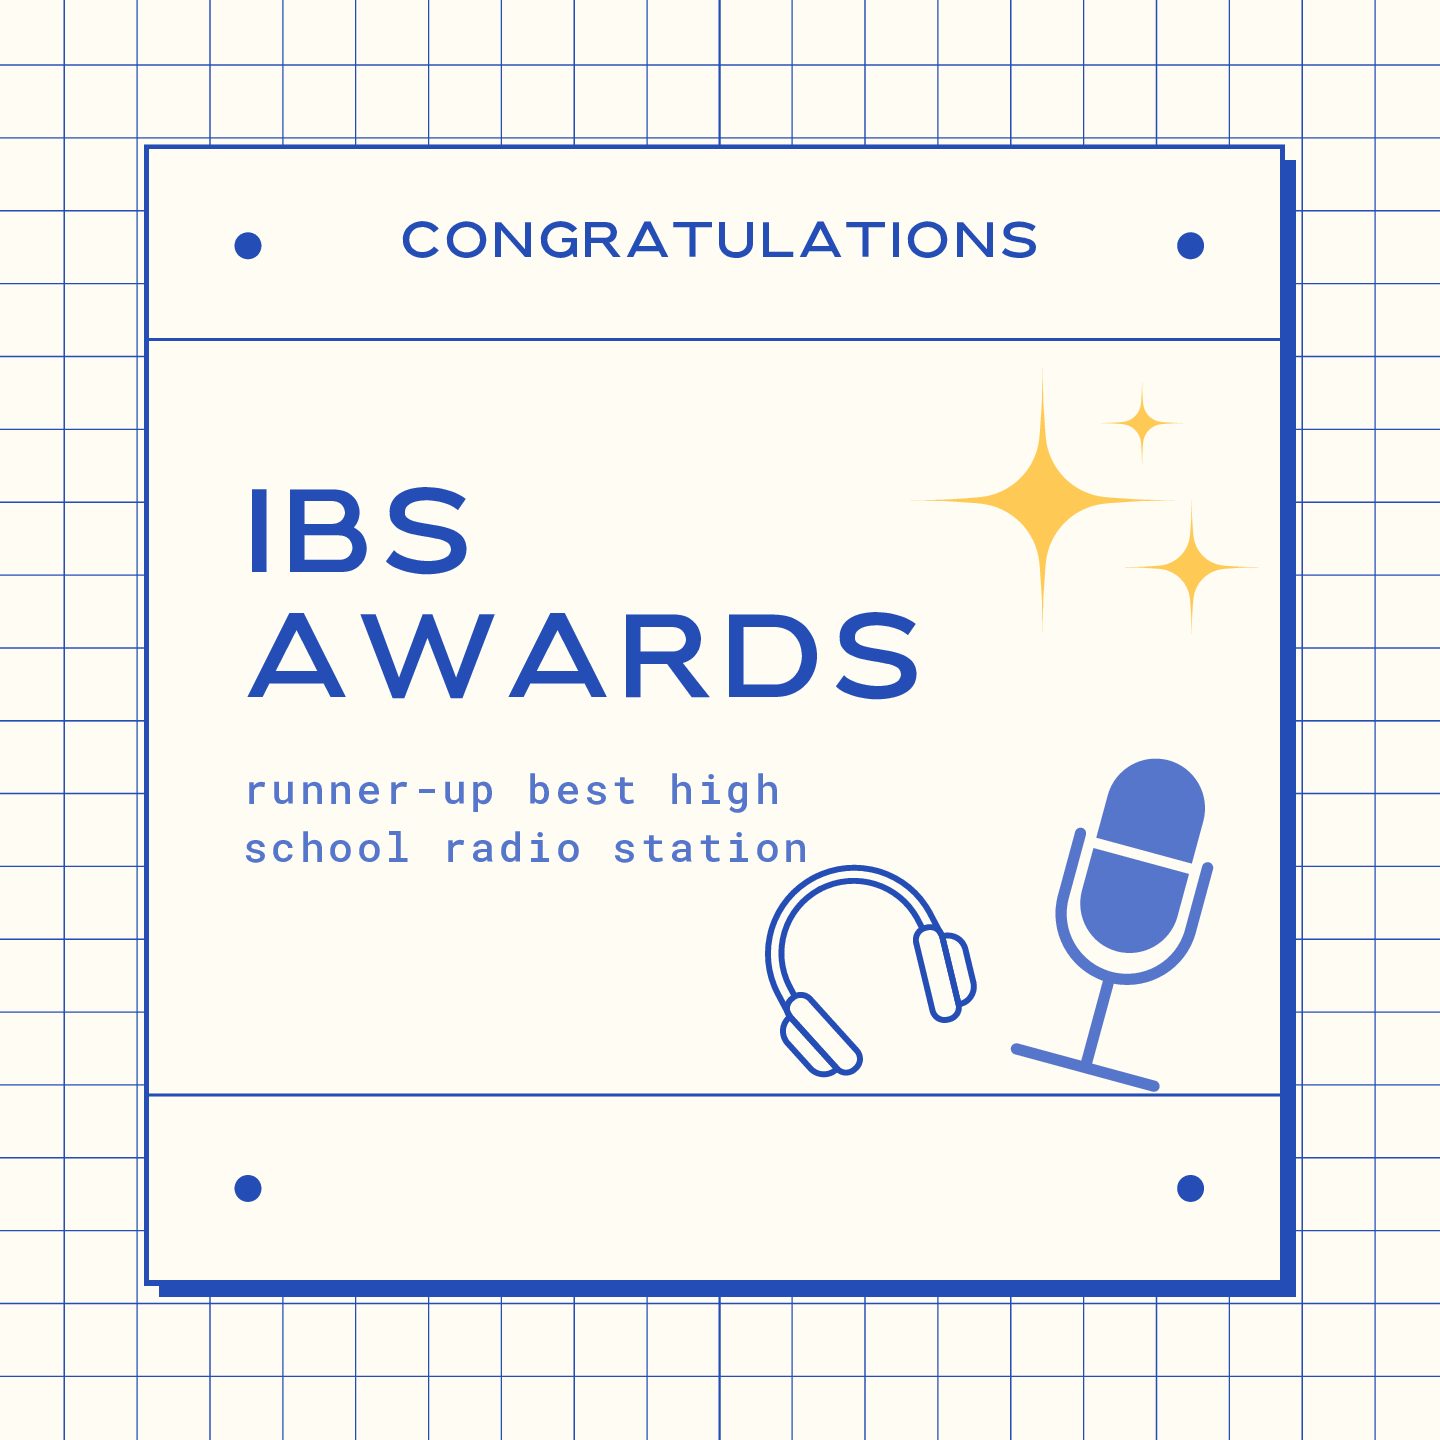 IBS Awards